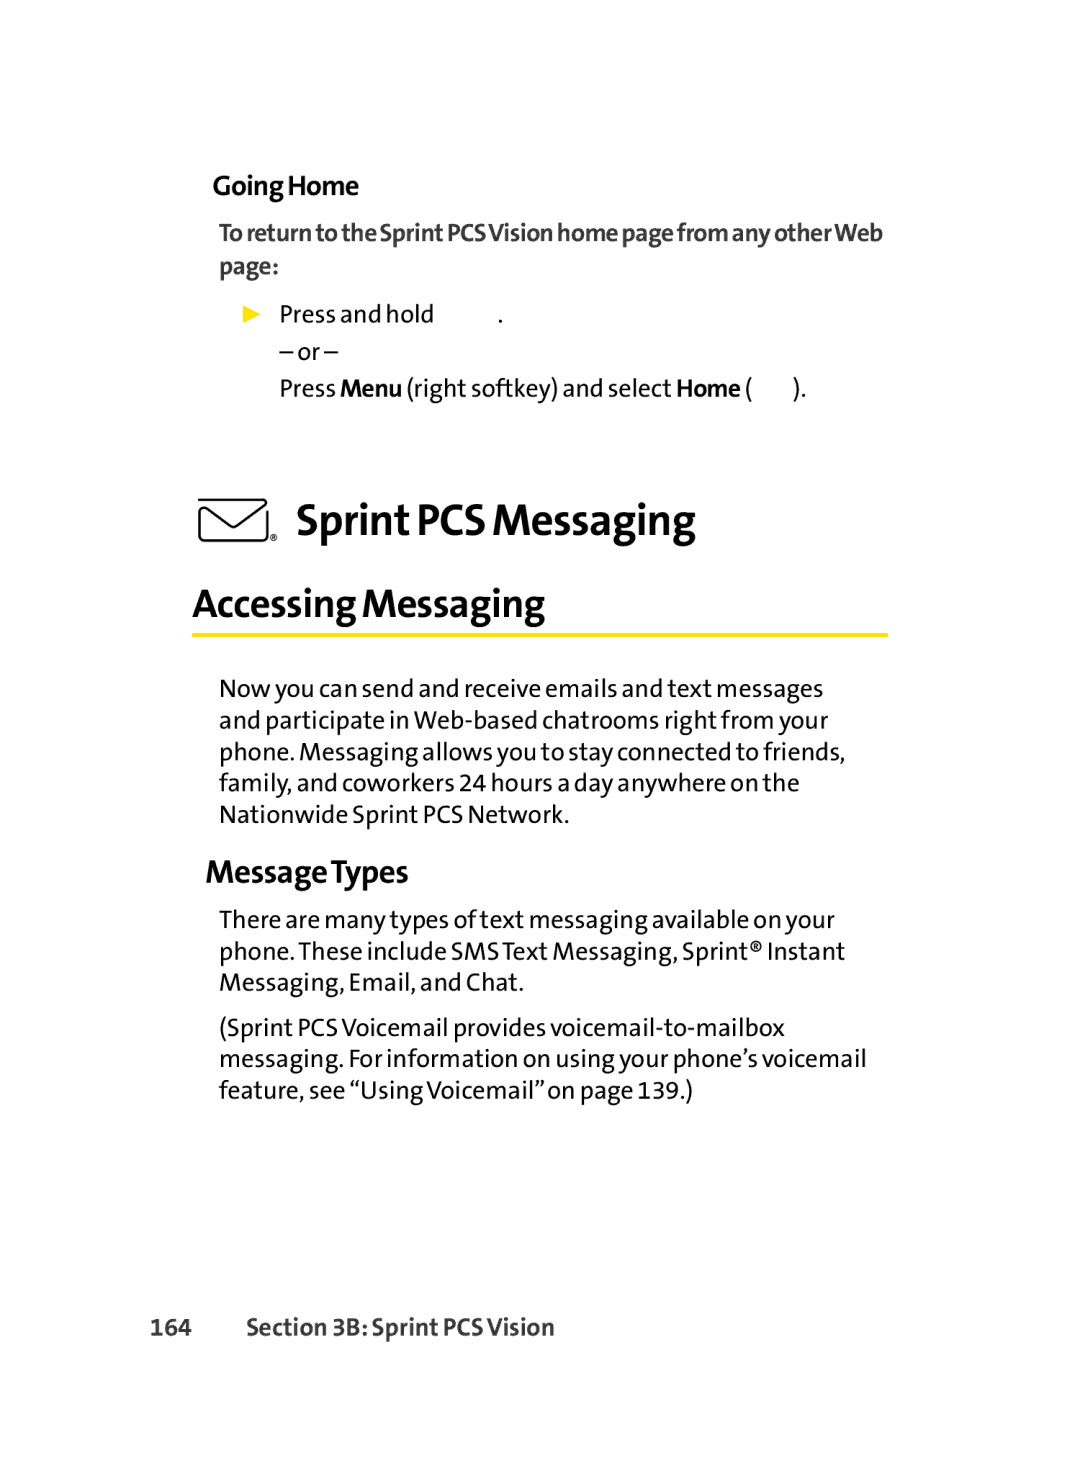 Sprint Nextel LX350 manual SprintPCS Messaging, Accessing Messaging, MessageTypes, GoingHome 